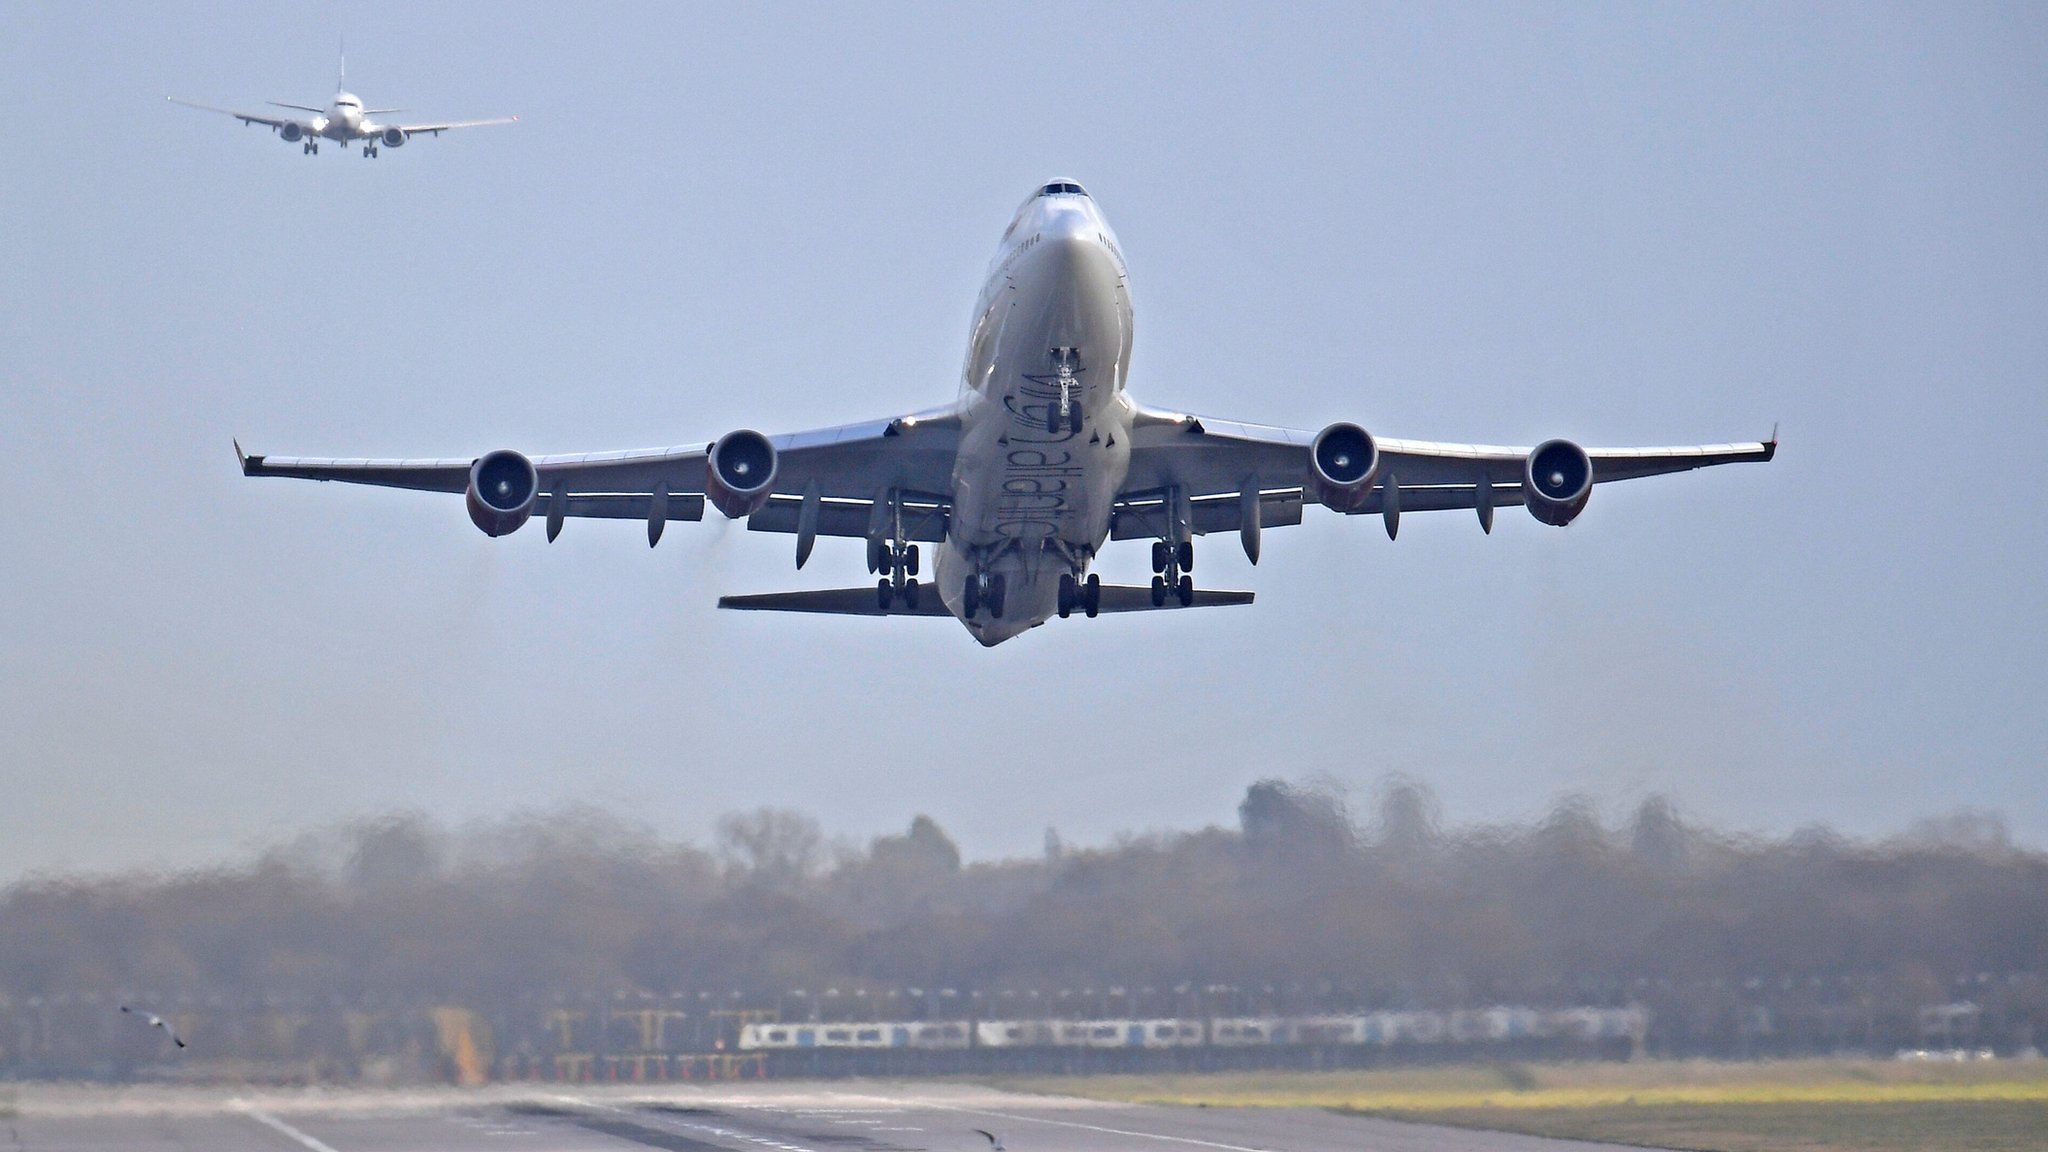 An aeroplane taking off at Gatwick Airport